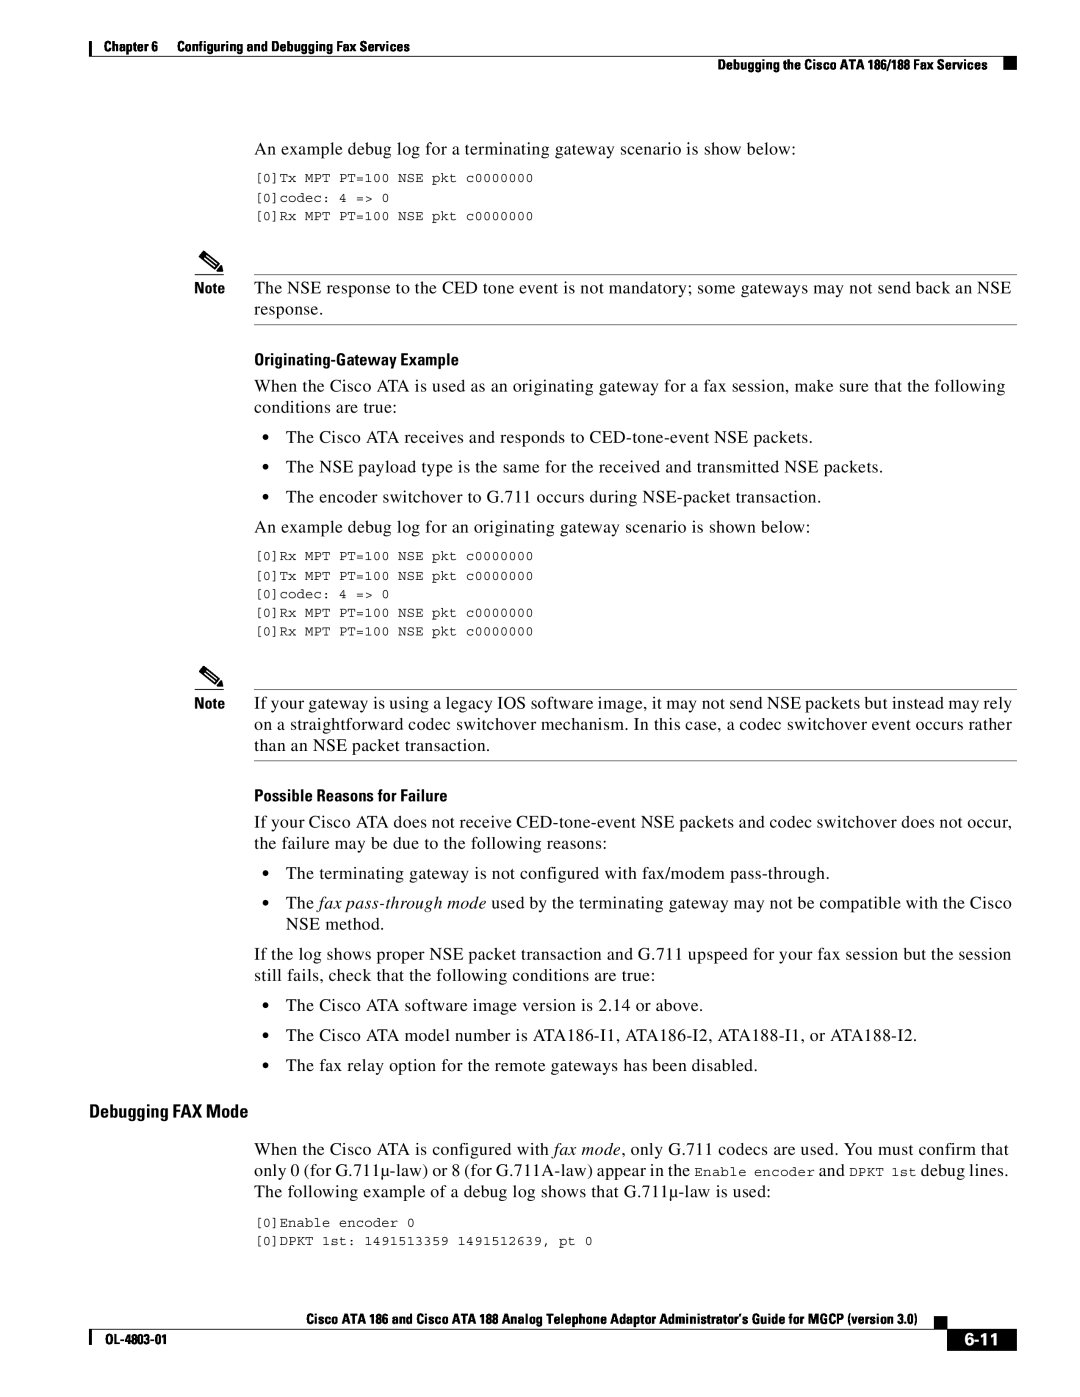 Cisco Systems ATA 186 manual Debugging FAX Mode, Originating-Gateway Example, Possible Reasons for Failure, 6-11 